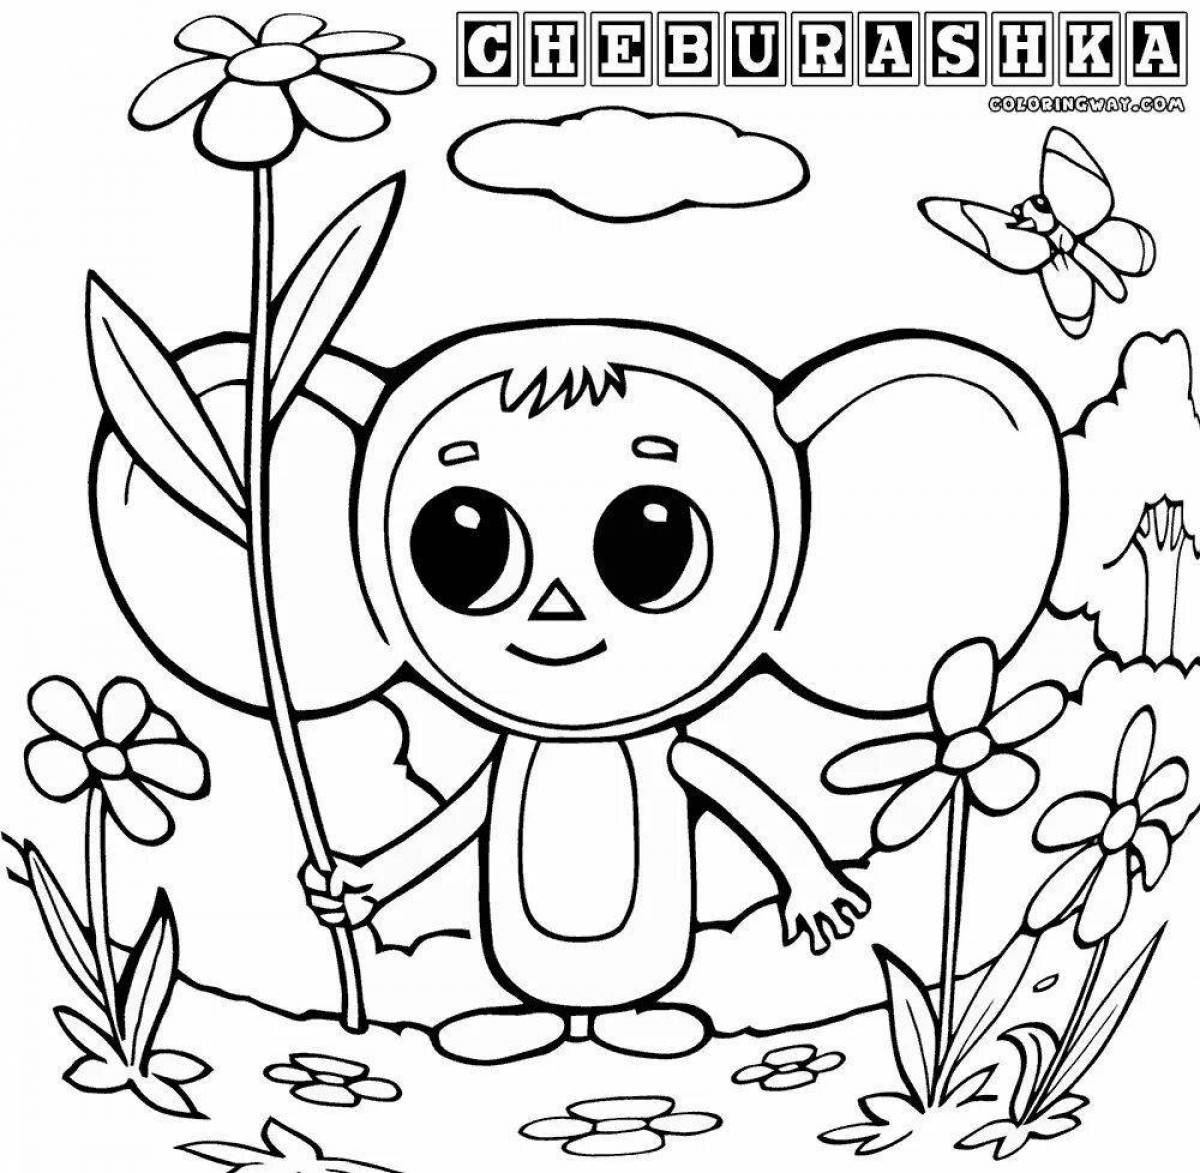 Animated drawing of Cheburashka